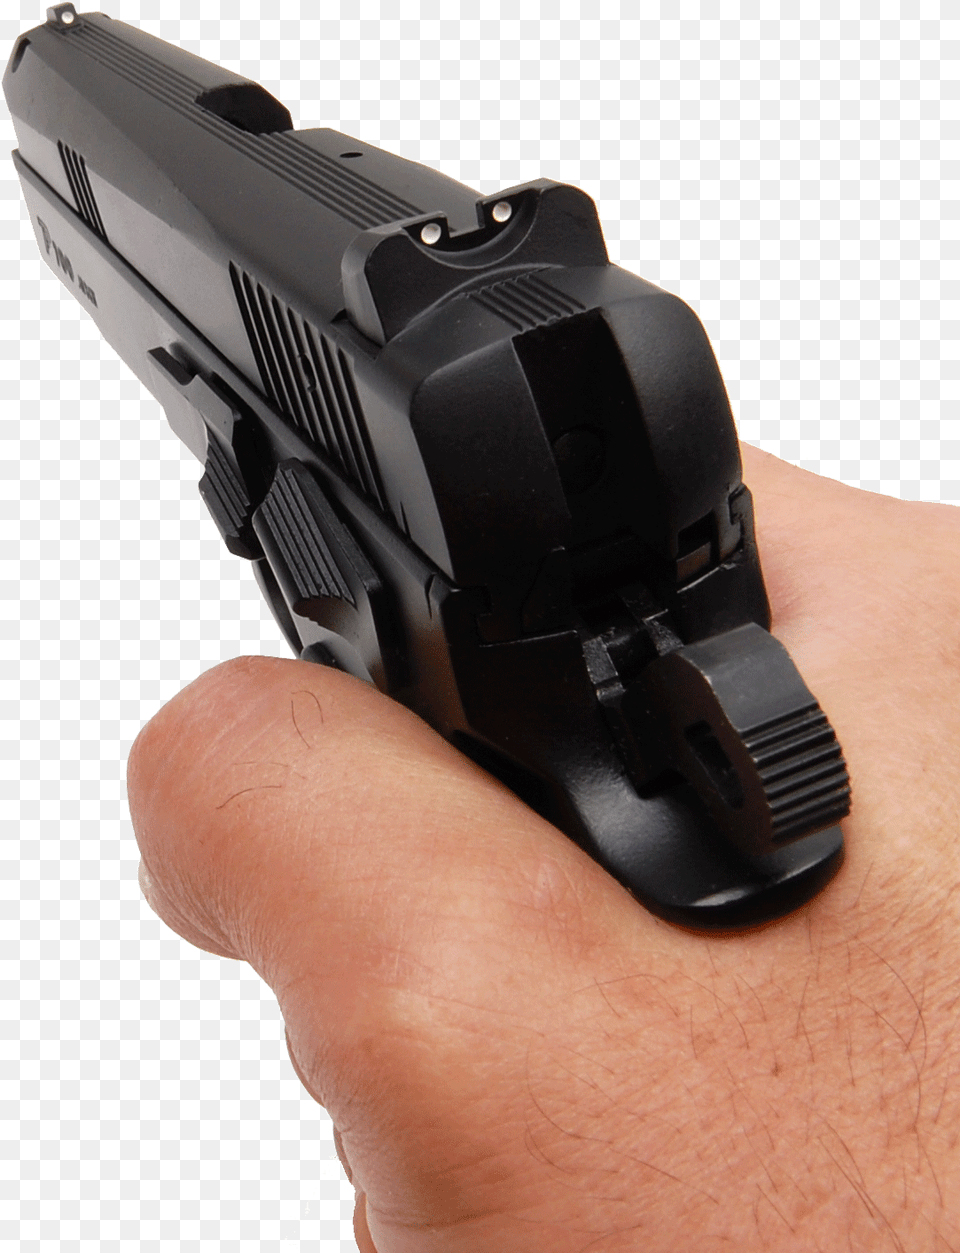 Gun In Hand, Firearm, Handgun, Weapon Png Image